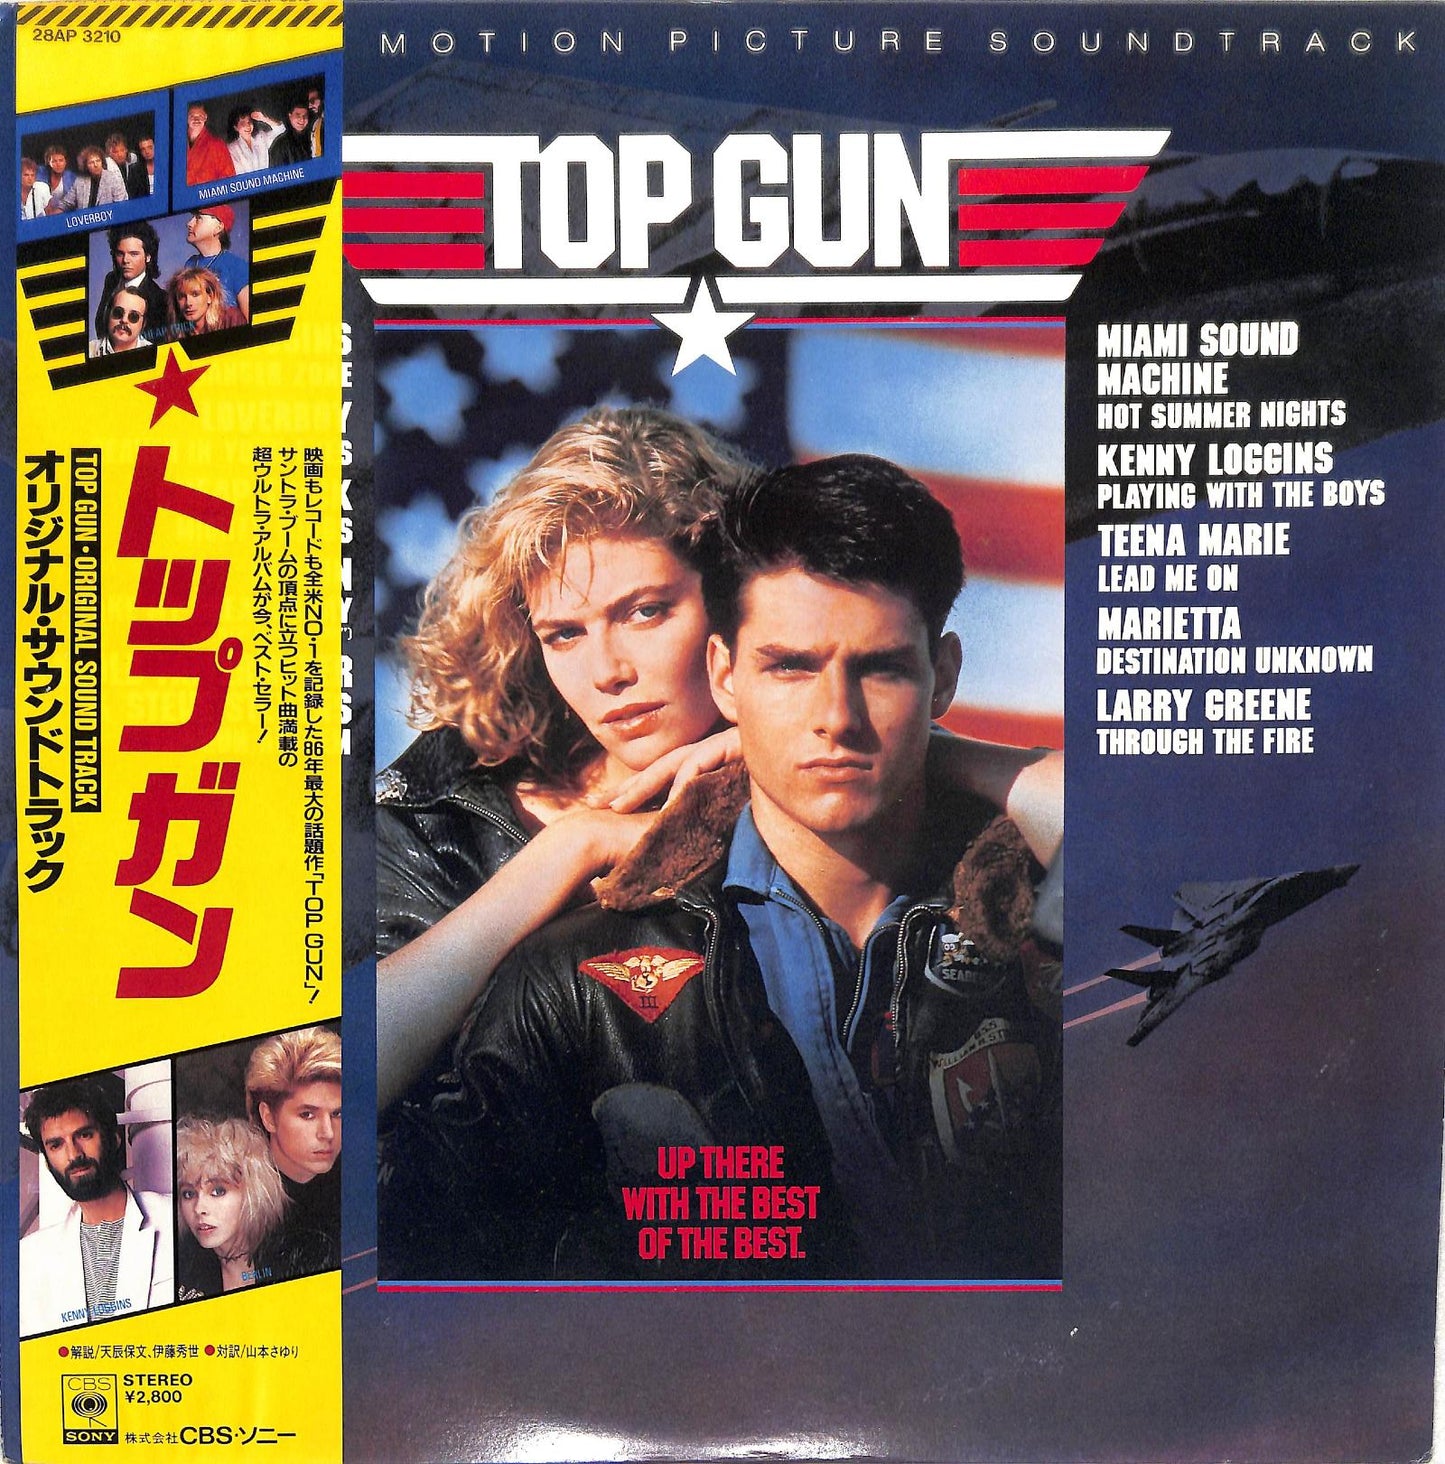 VA - Top Gun Original Motion Picture Soundtrack